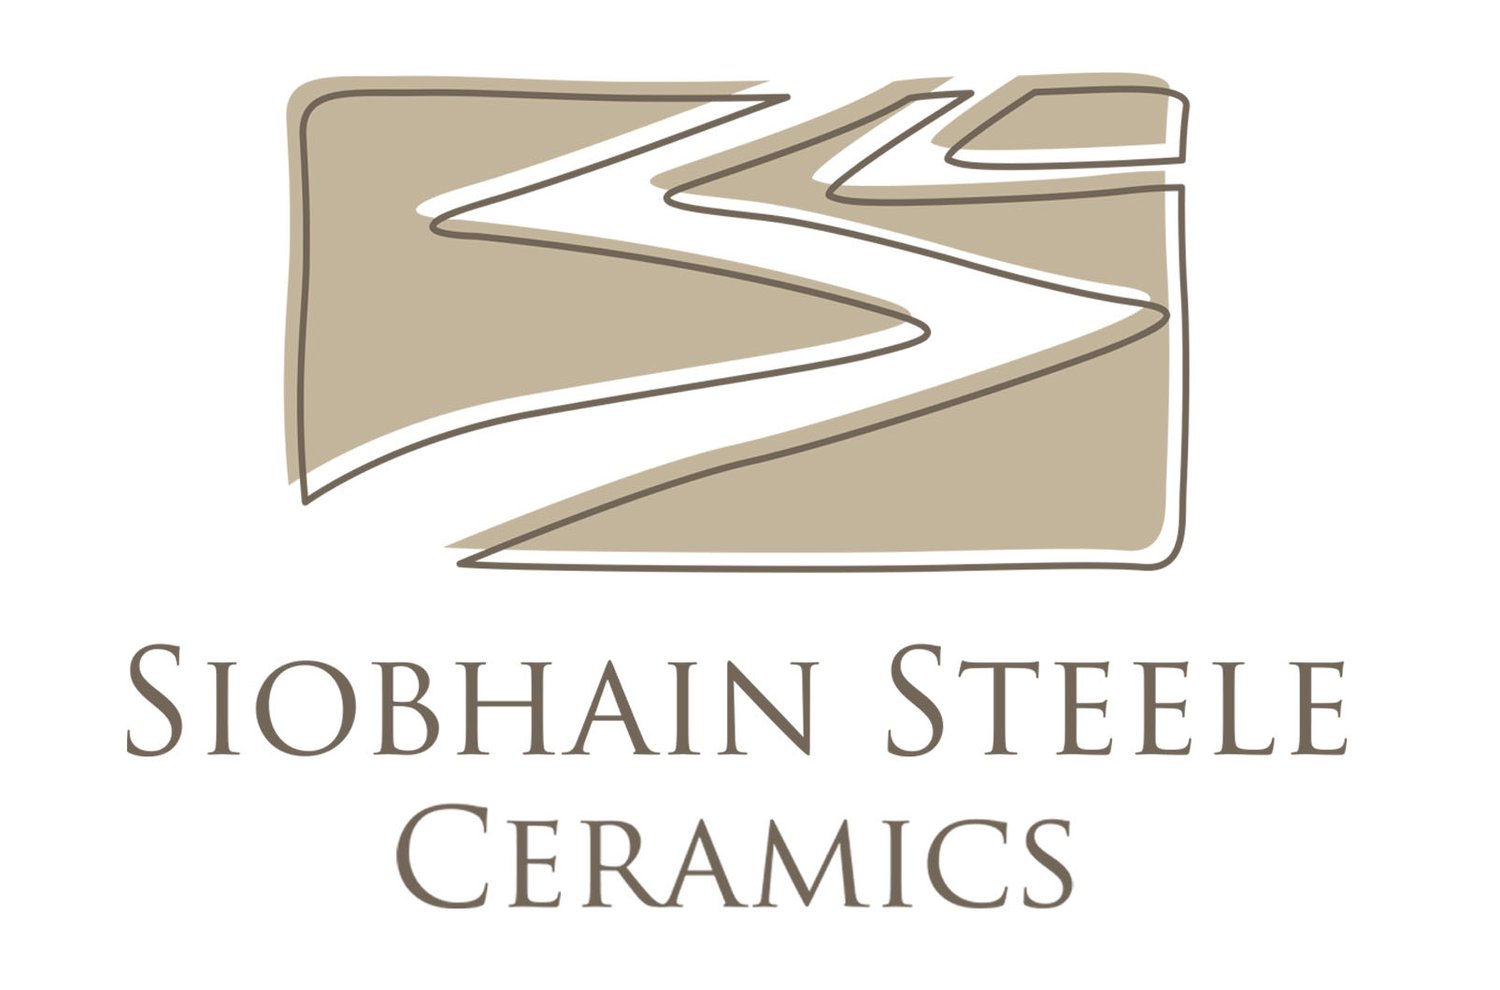 Irish Pottery and Ceramics - Siobhain Steele